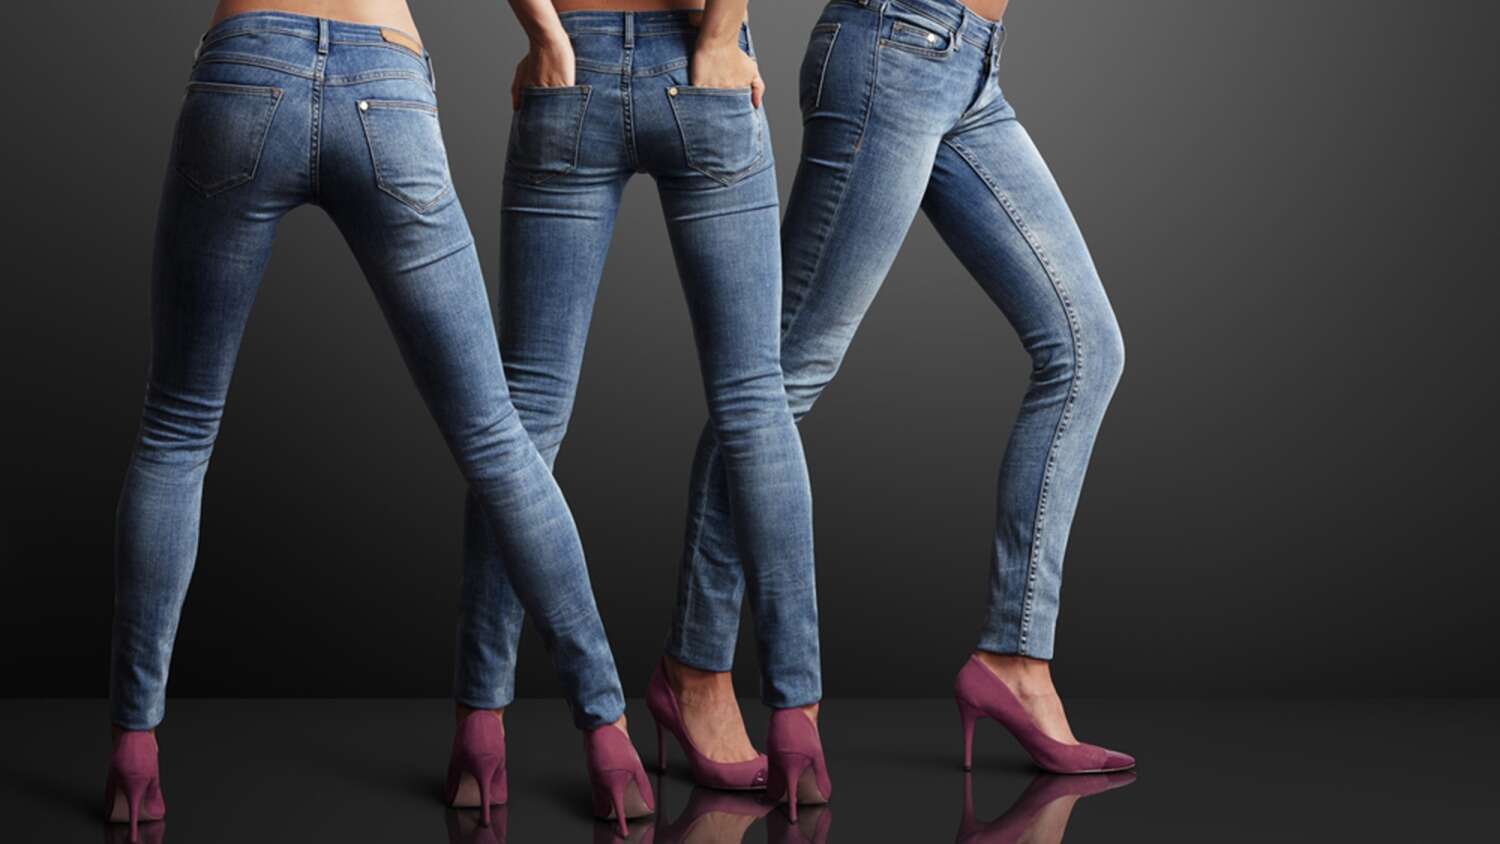 Skinny Jeans Stock Today 150622